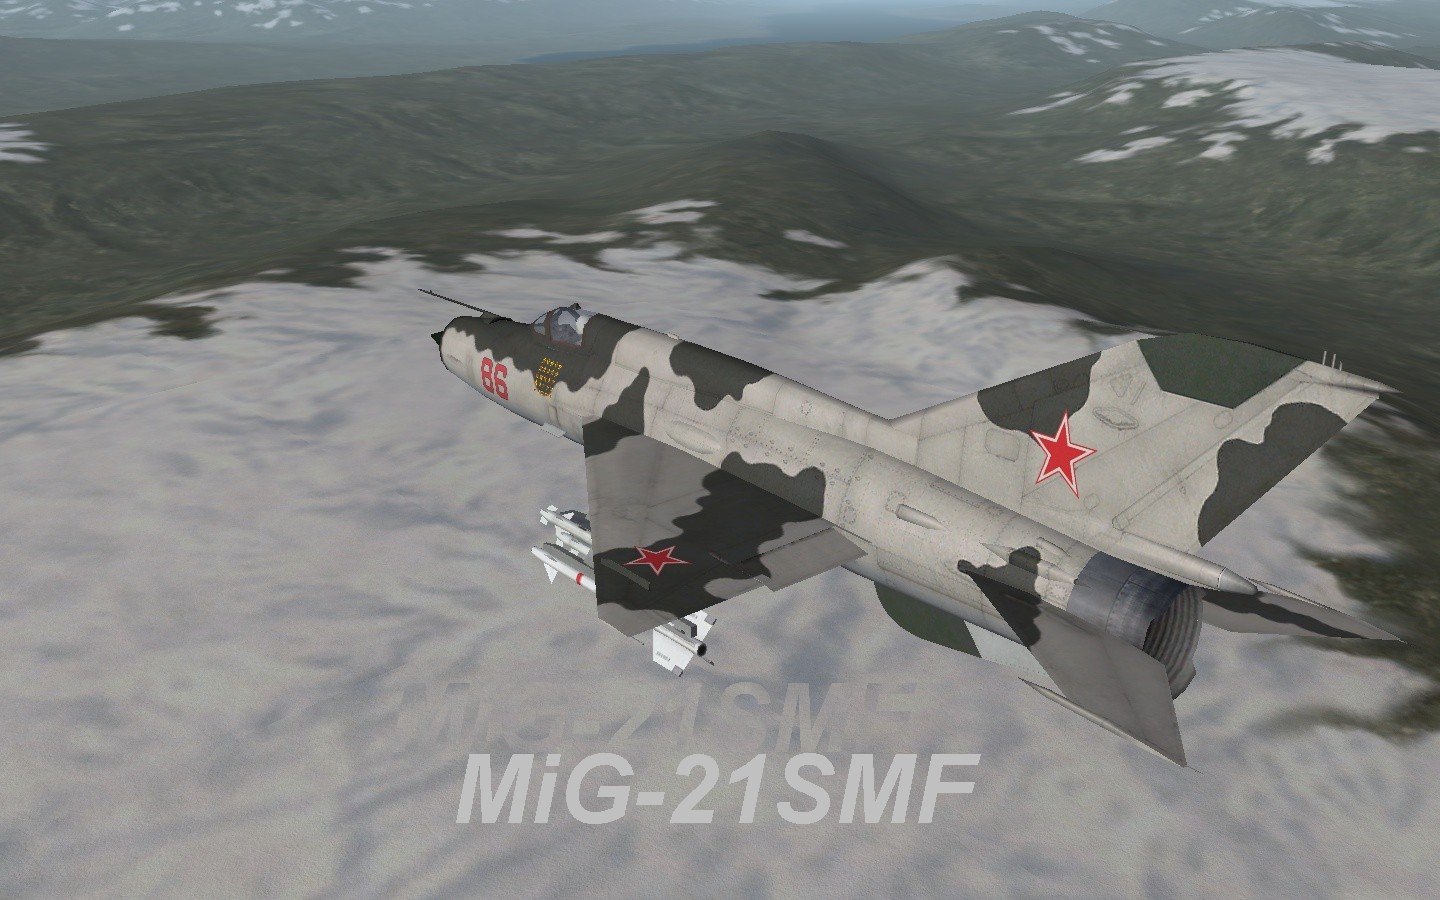 MiG-21SMF